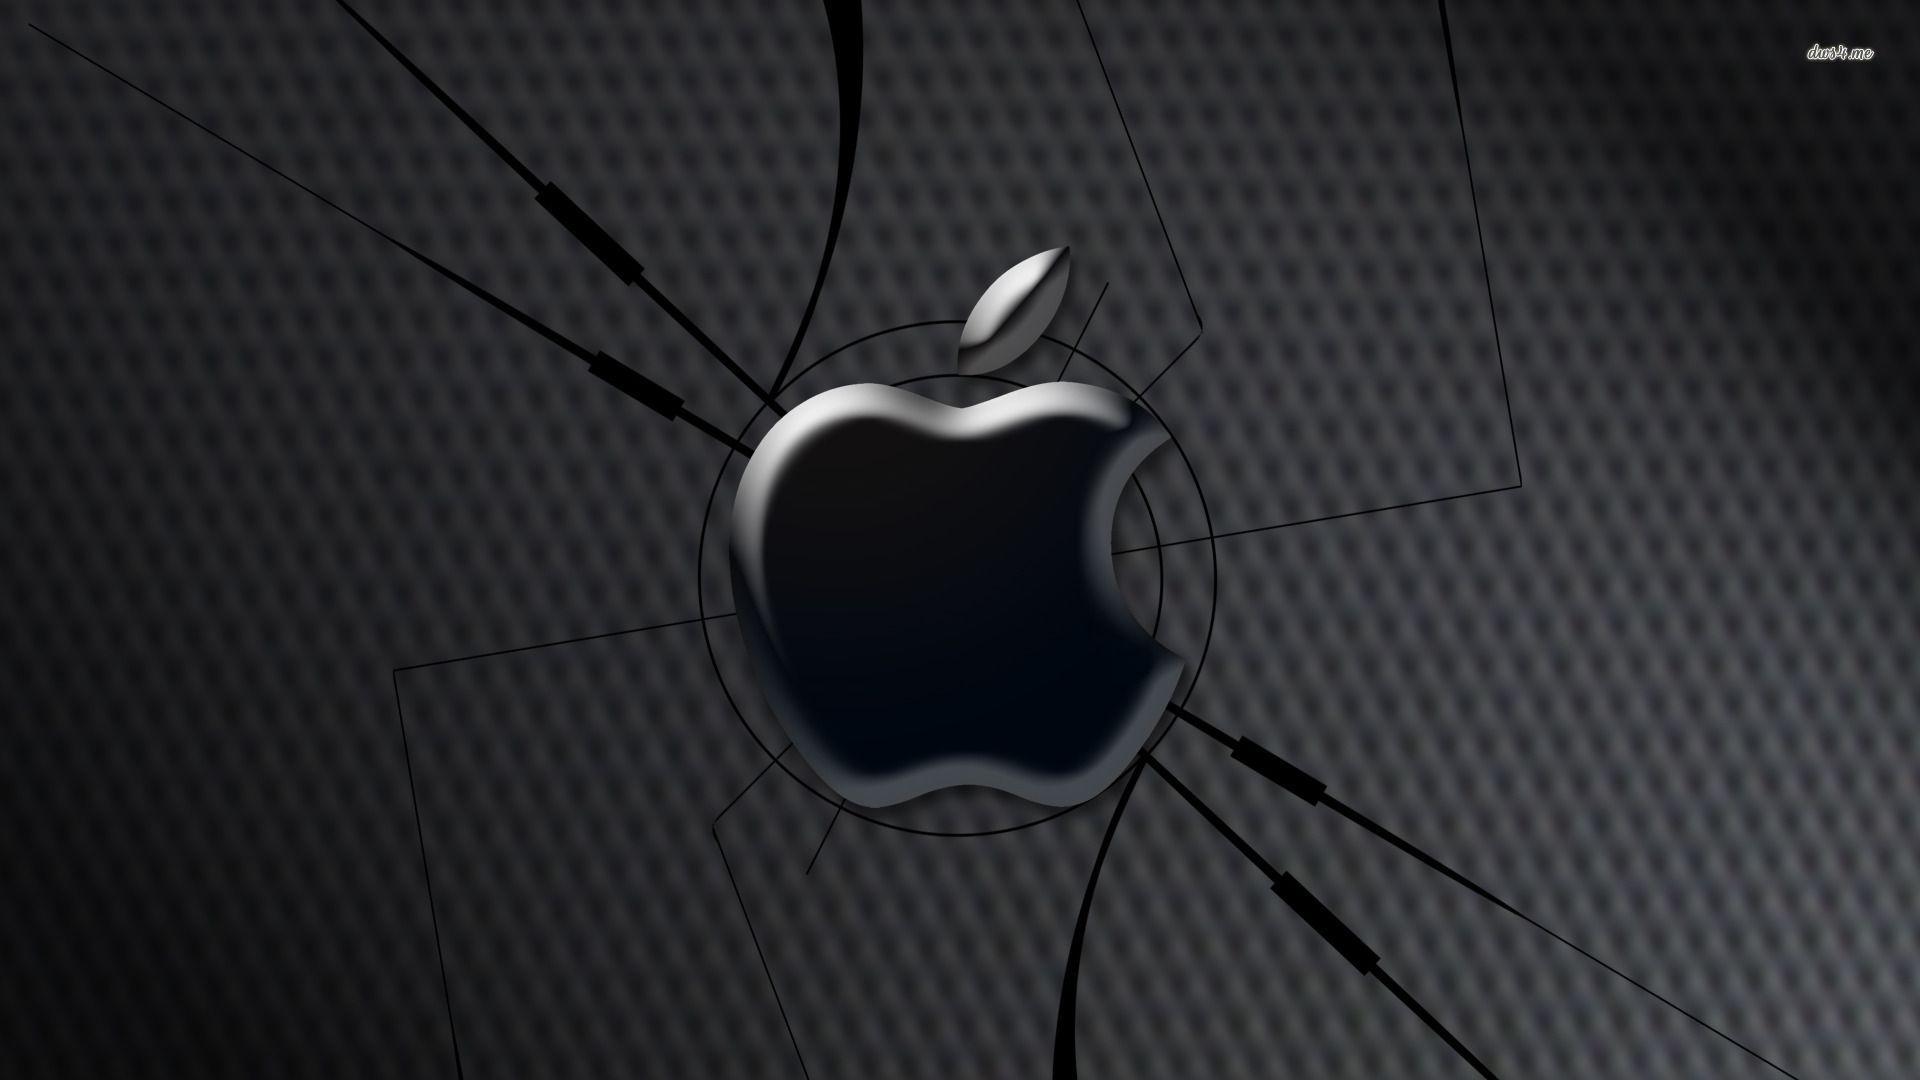 Broken Glass Apple Logo Computer Wallpaper 1920x1080 px Free